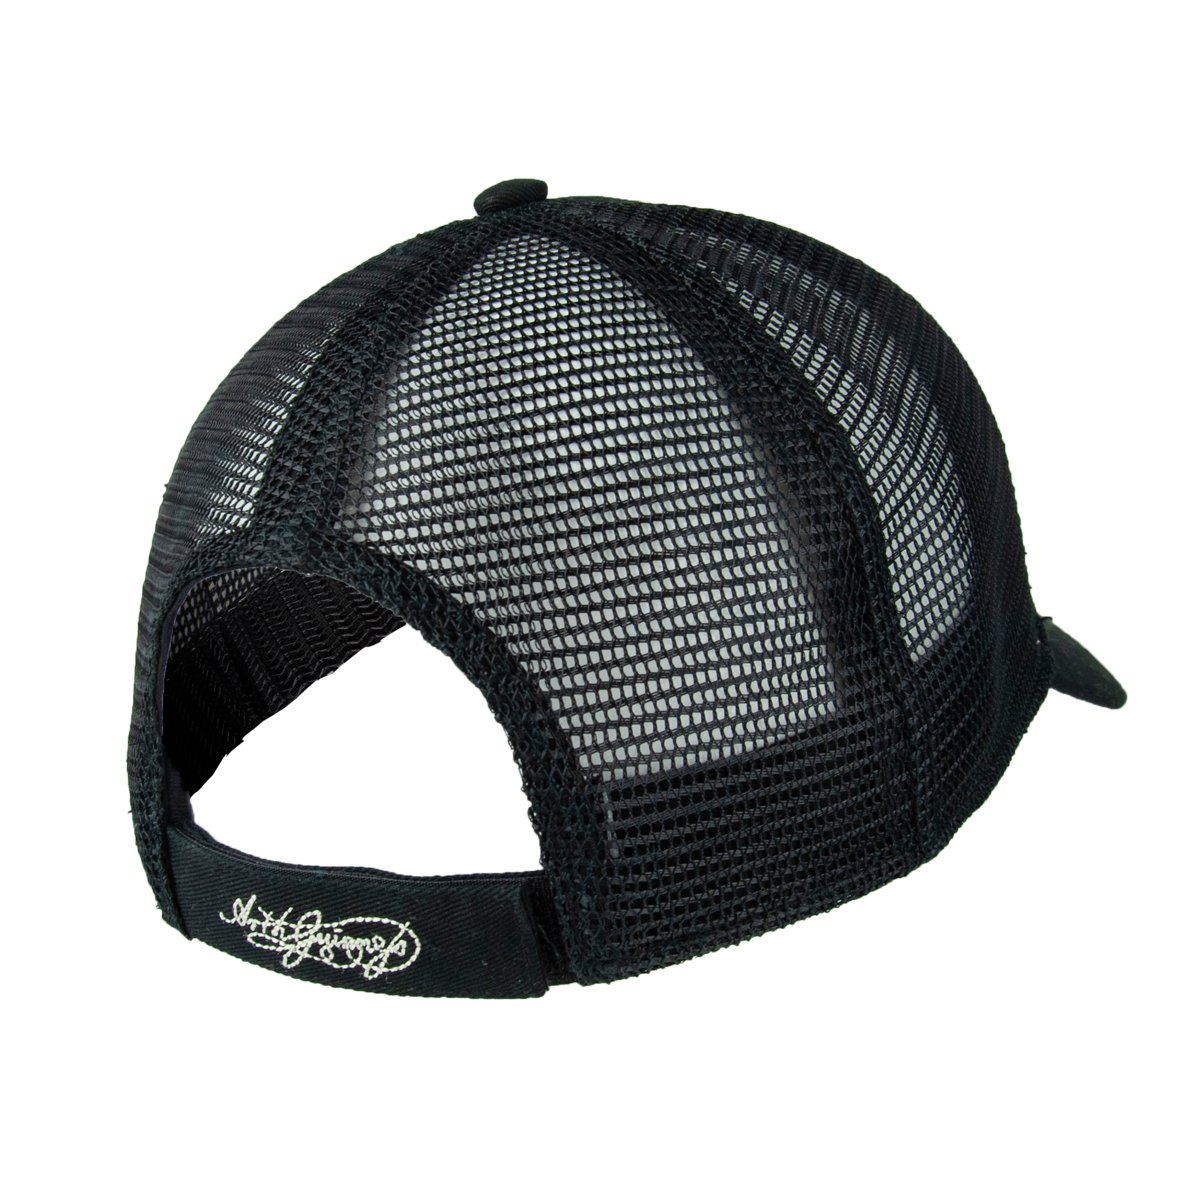 Product image for Irish Hats | Guinness Black Trucker Mesh Adjustable Baseball Cap 